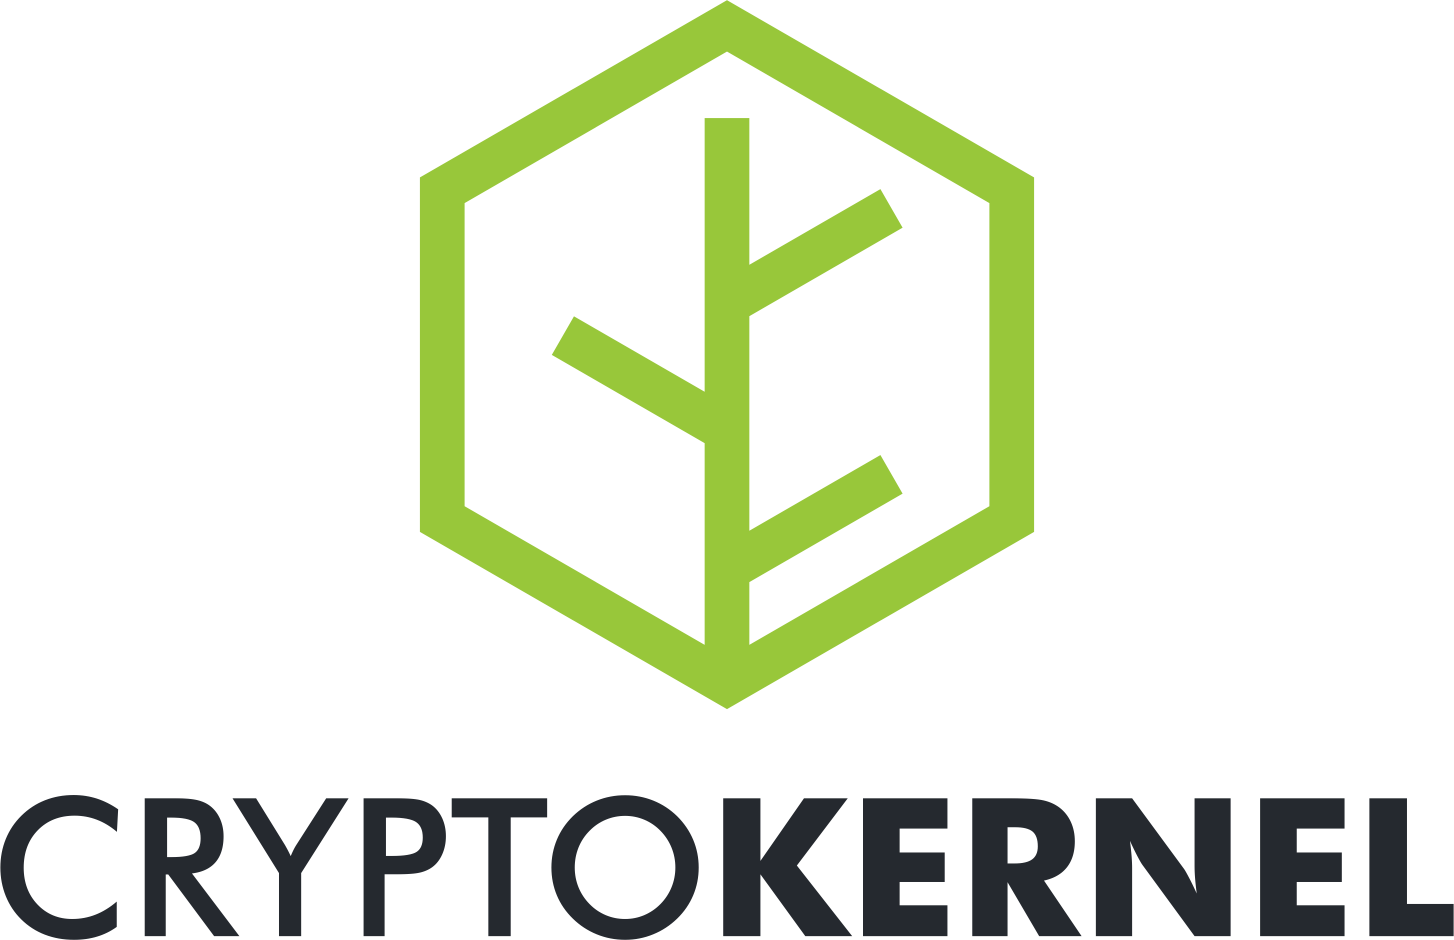 Cryptokernel logo